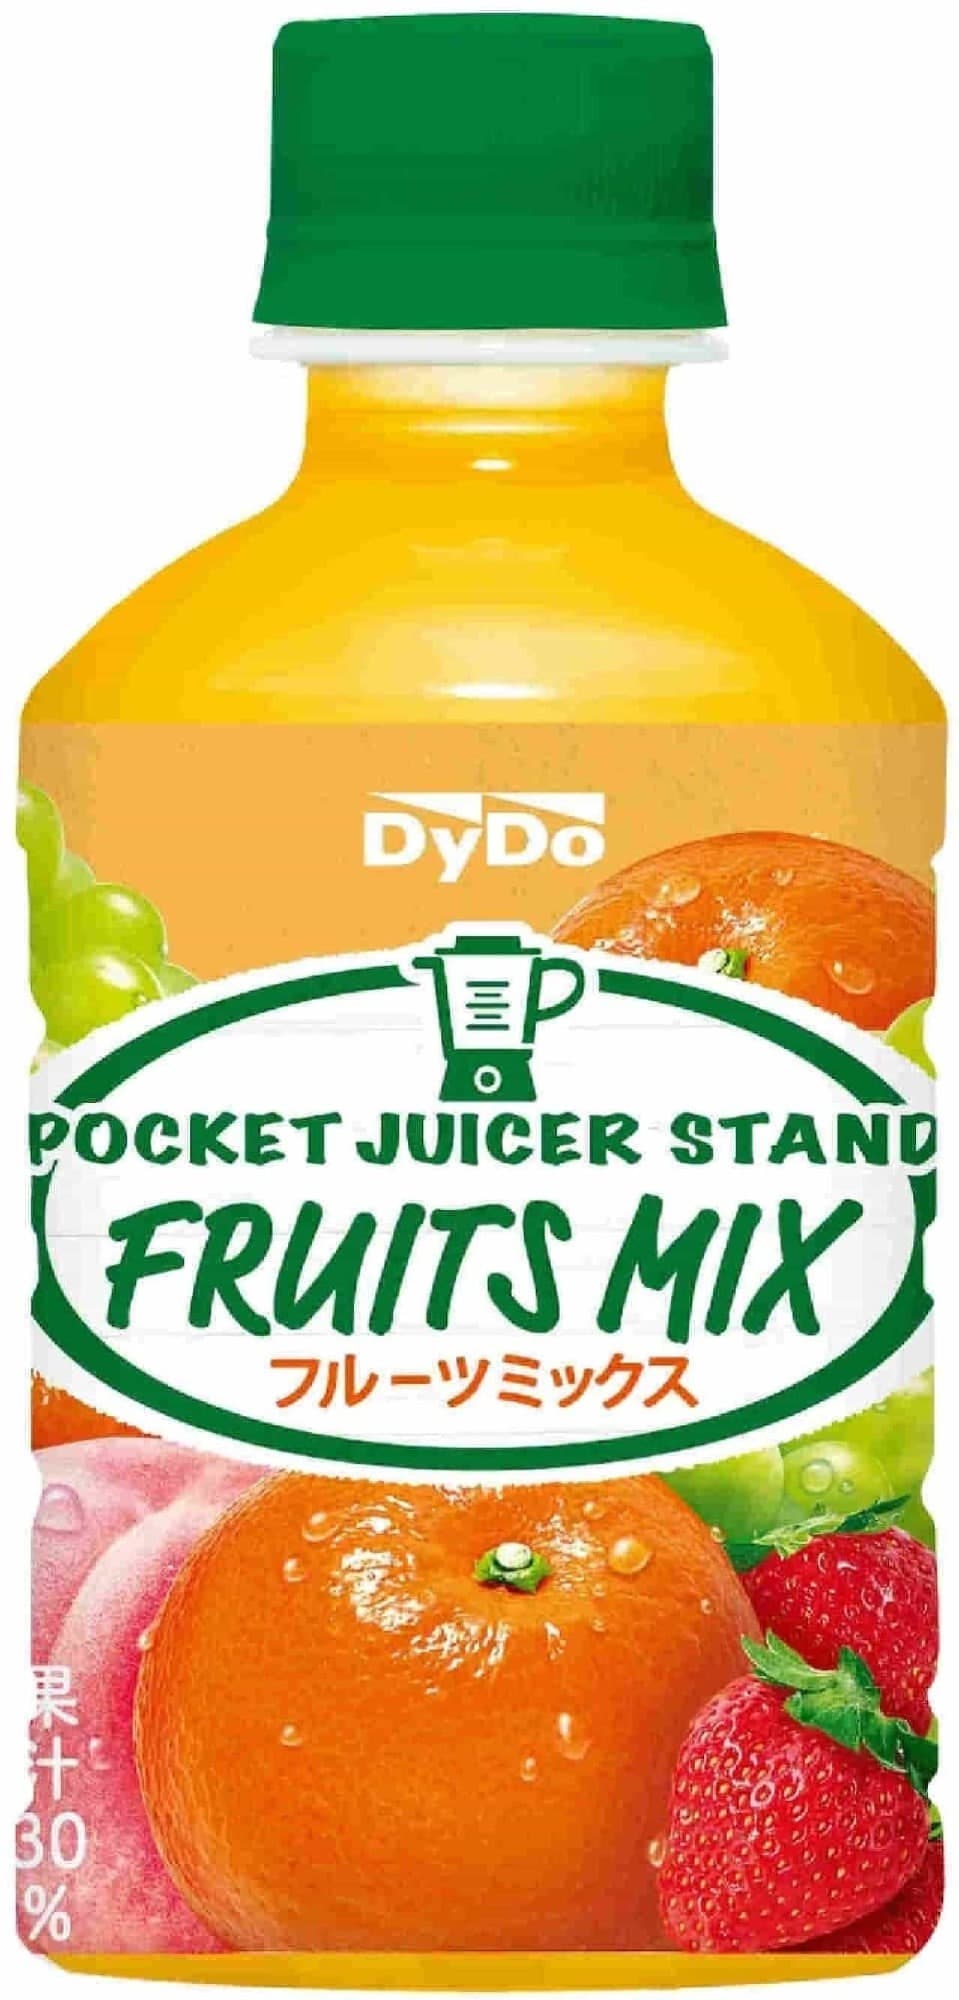 DyDo DRINCO "Pocket Juicer Stand Fruit Mix"